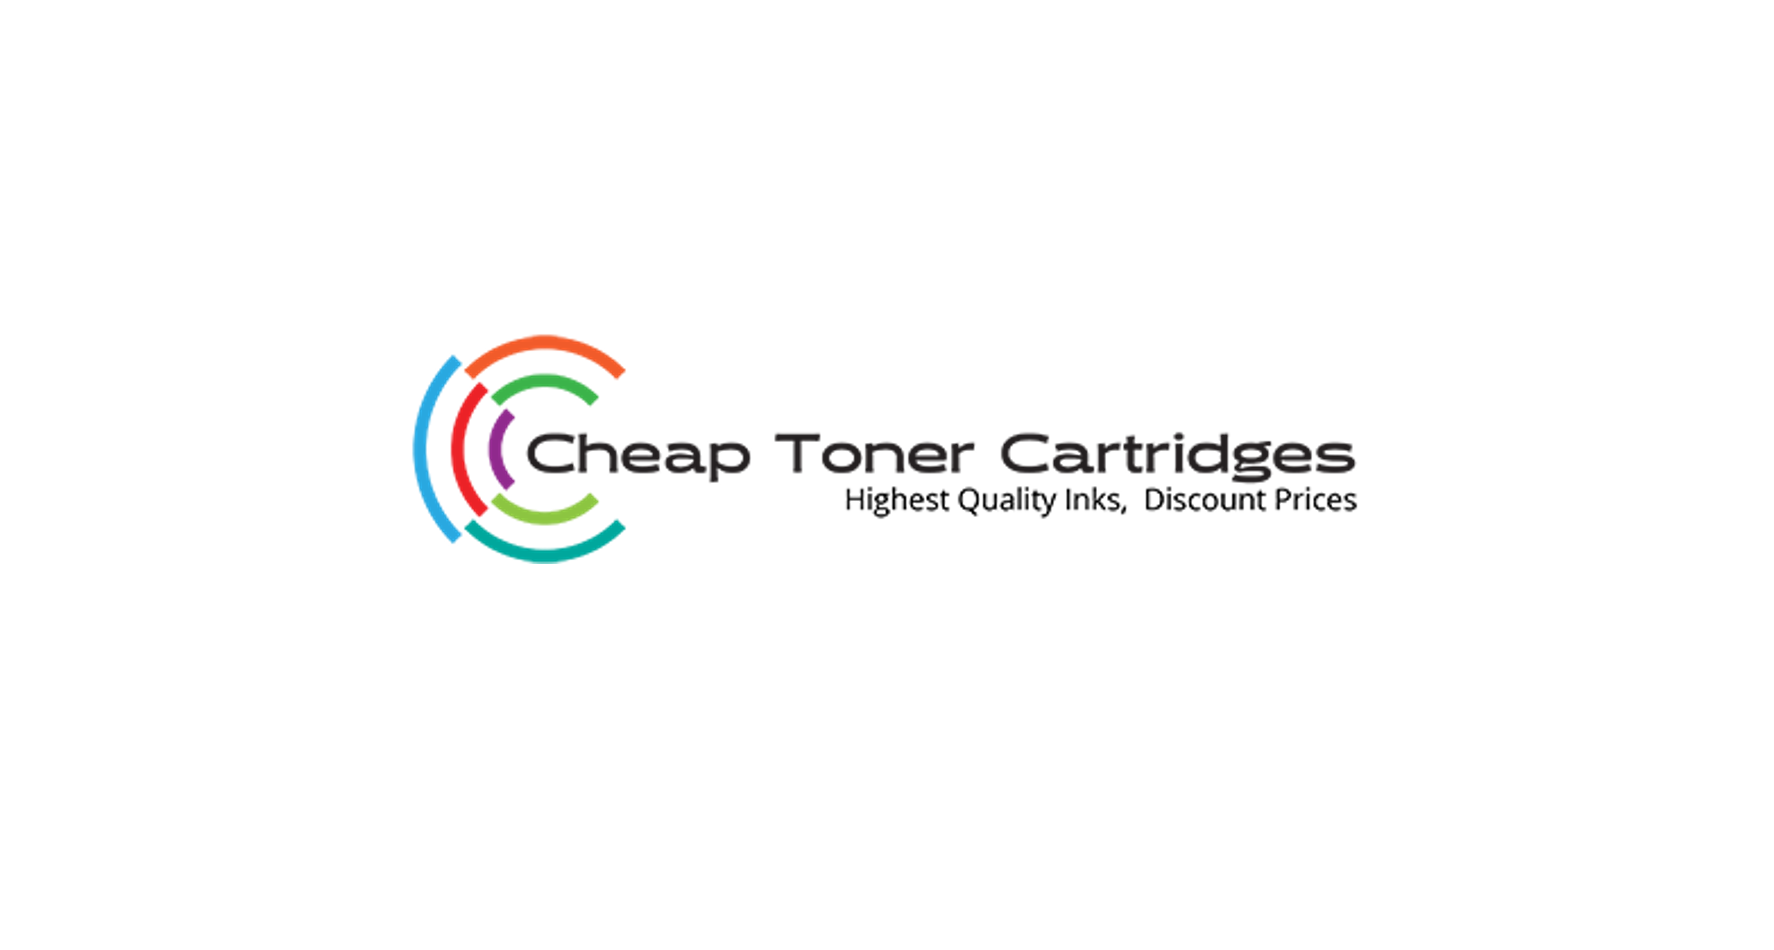 Cheap Toner Cartridges